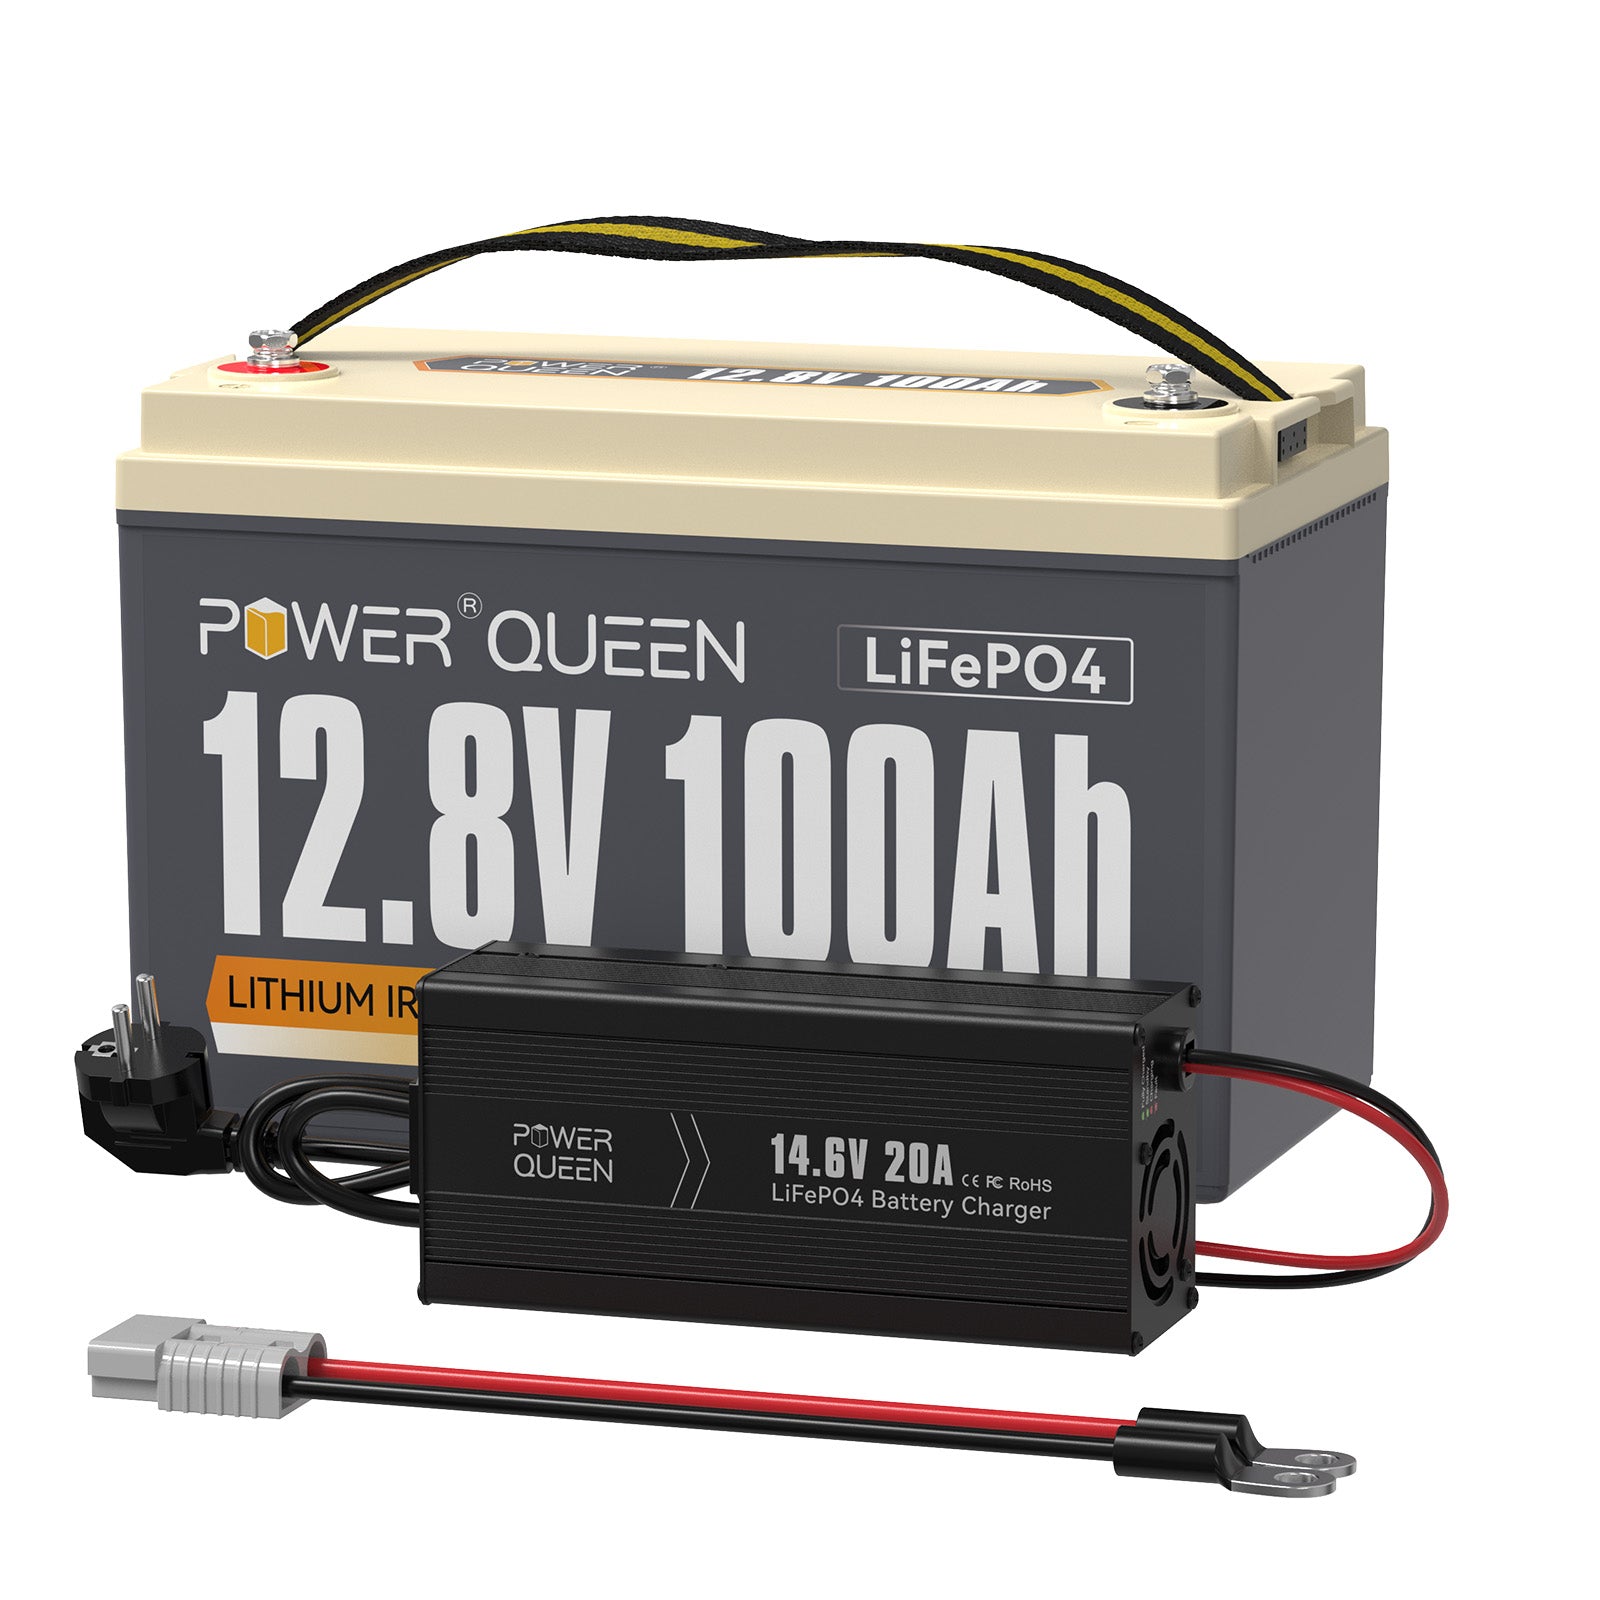 12,8V 100Ah Lithium Batterie mit 14,6V 20A Ladegerät